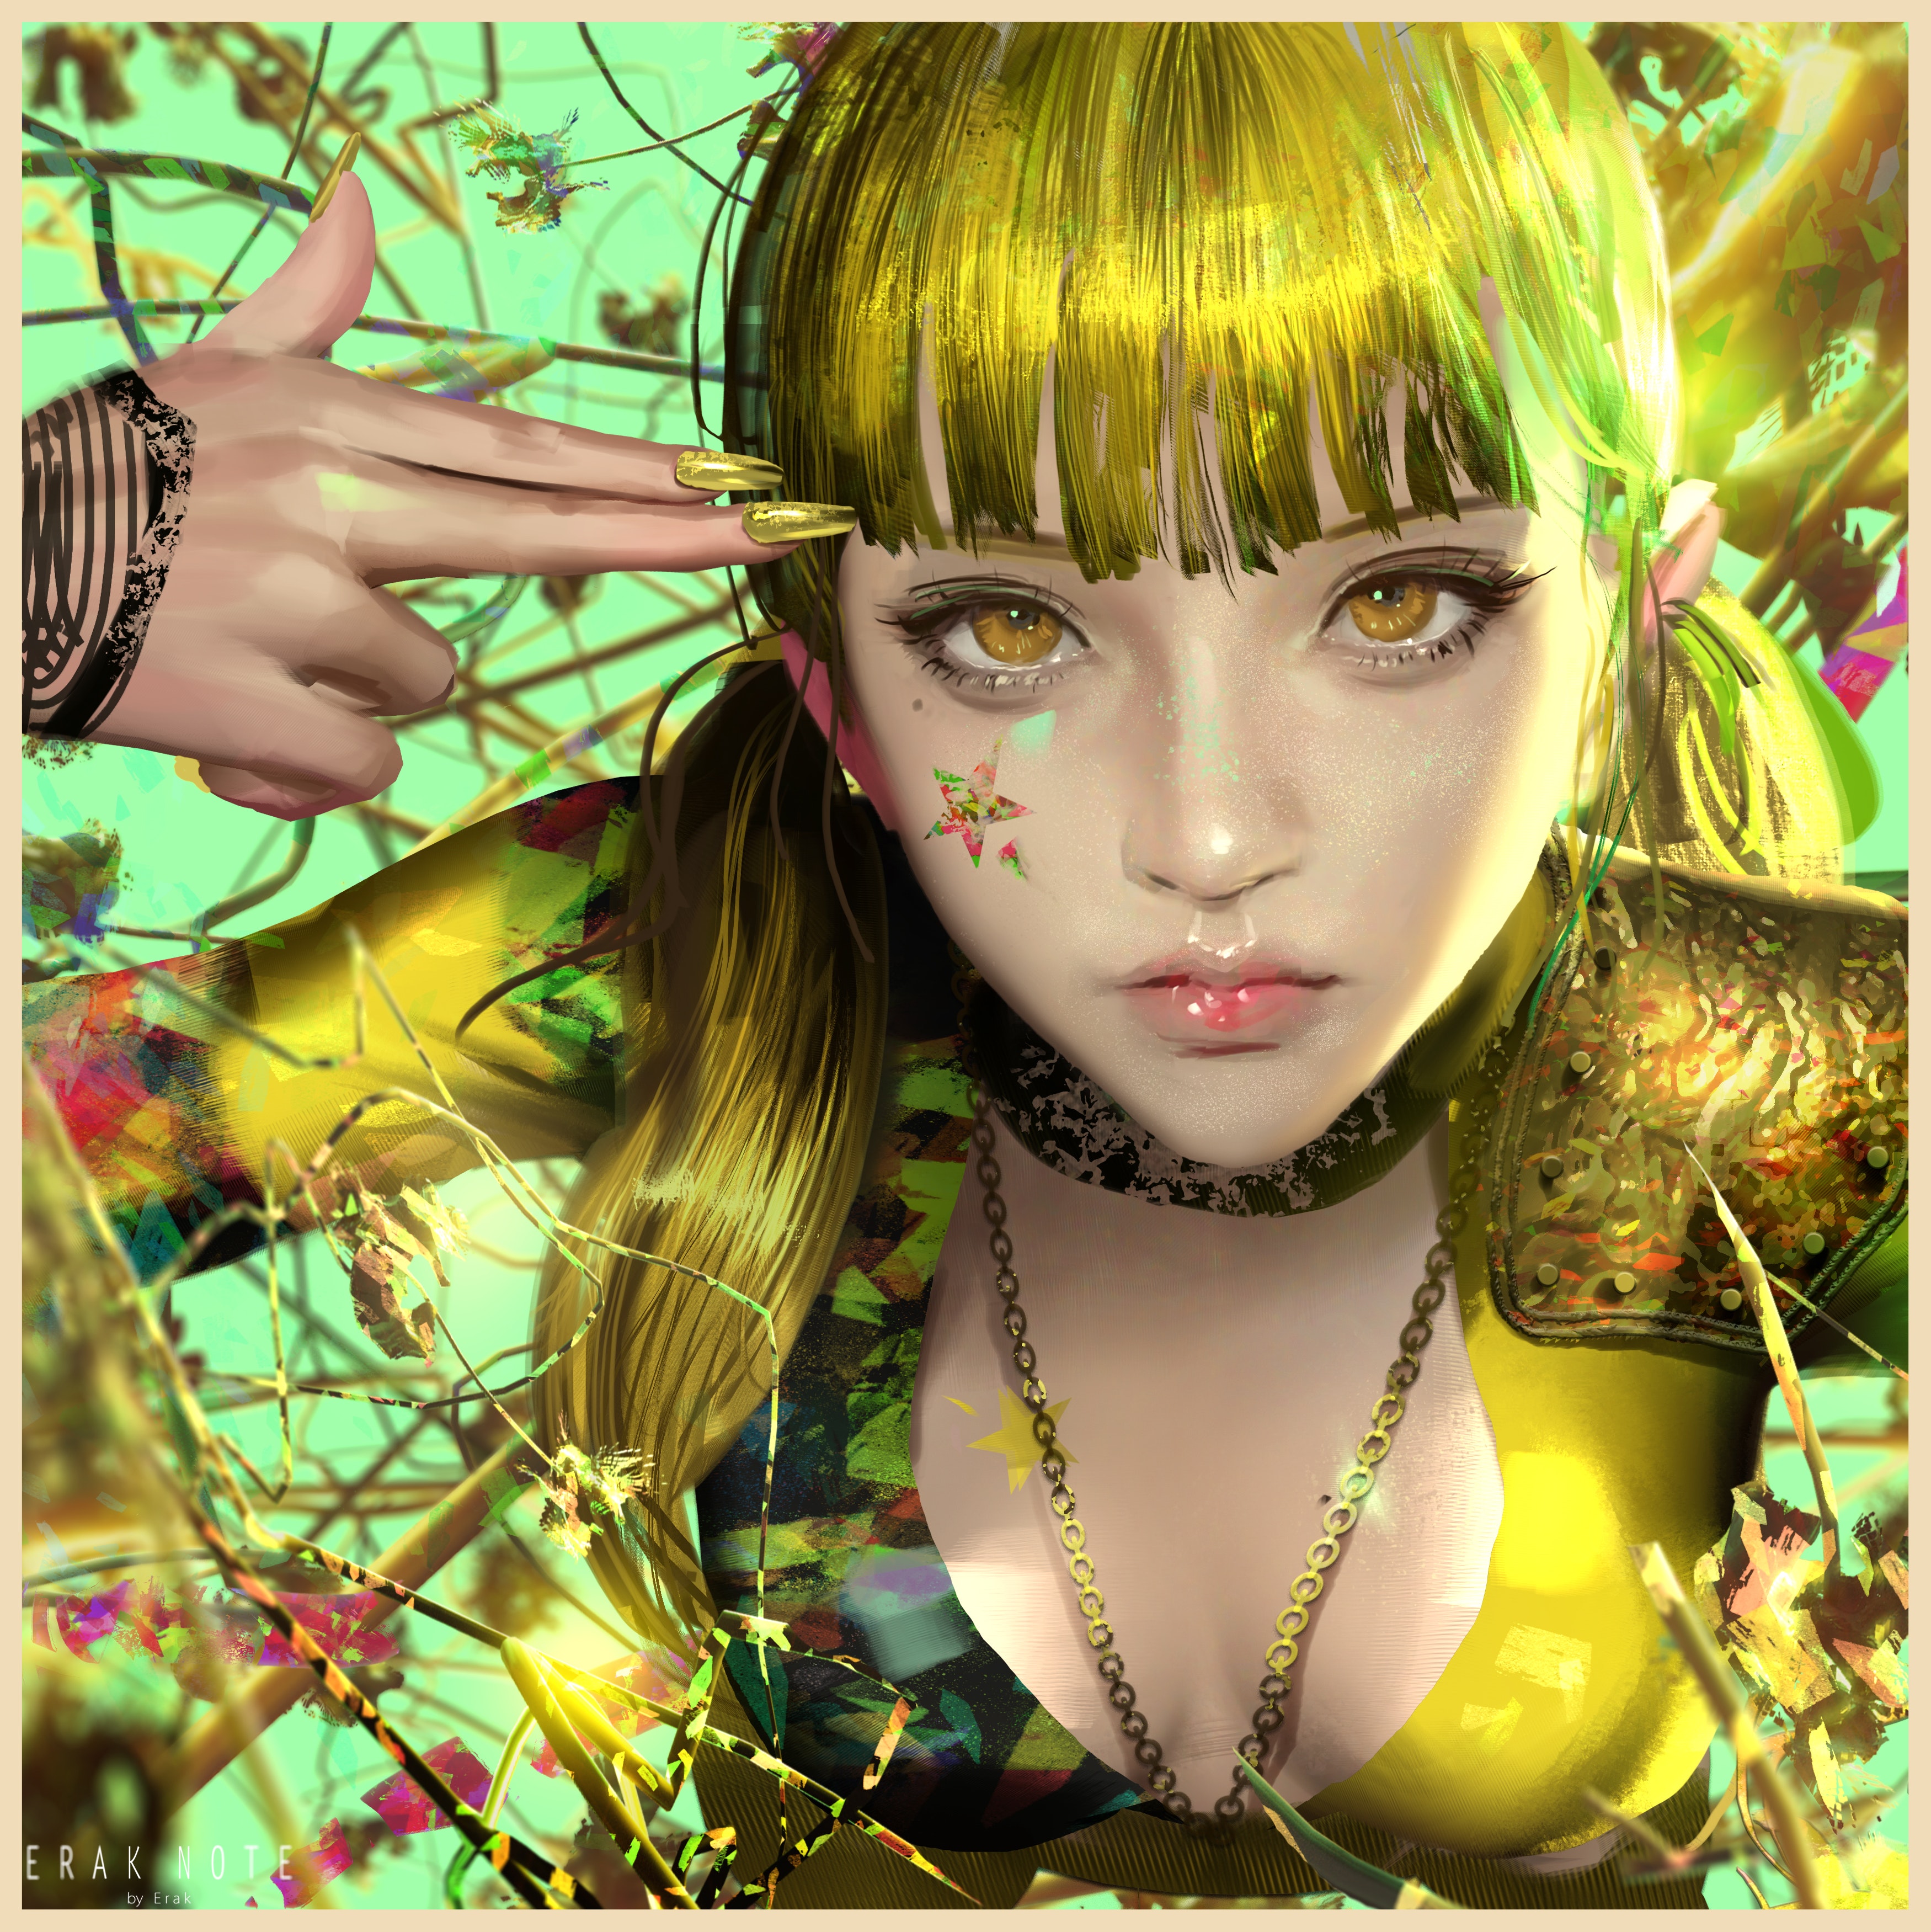 Digital Digital Art Artwork Illustration Portrait Looking At Viewer Women Fantasy Art Fantasy Girl E 3500x3501